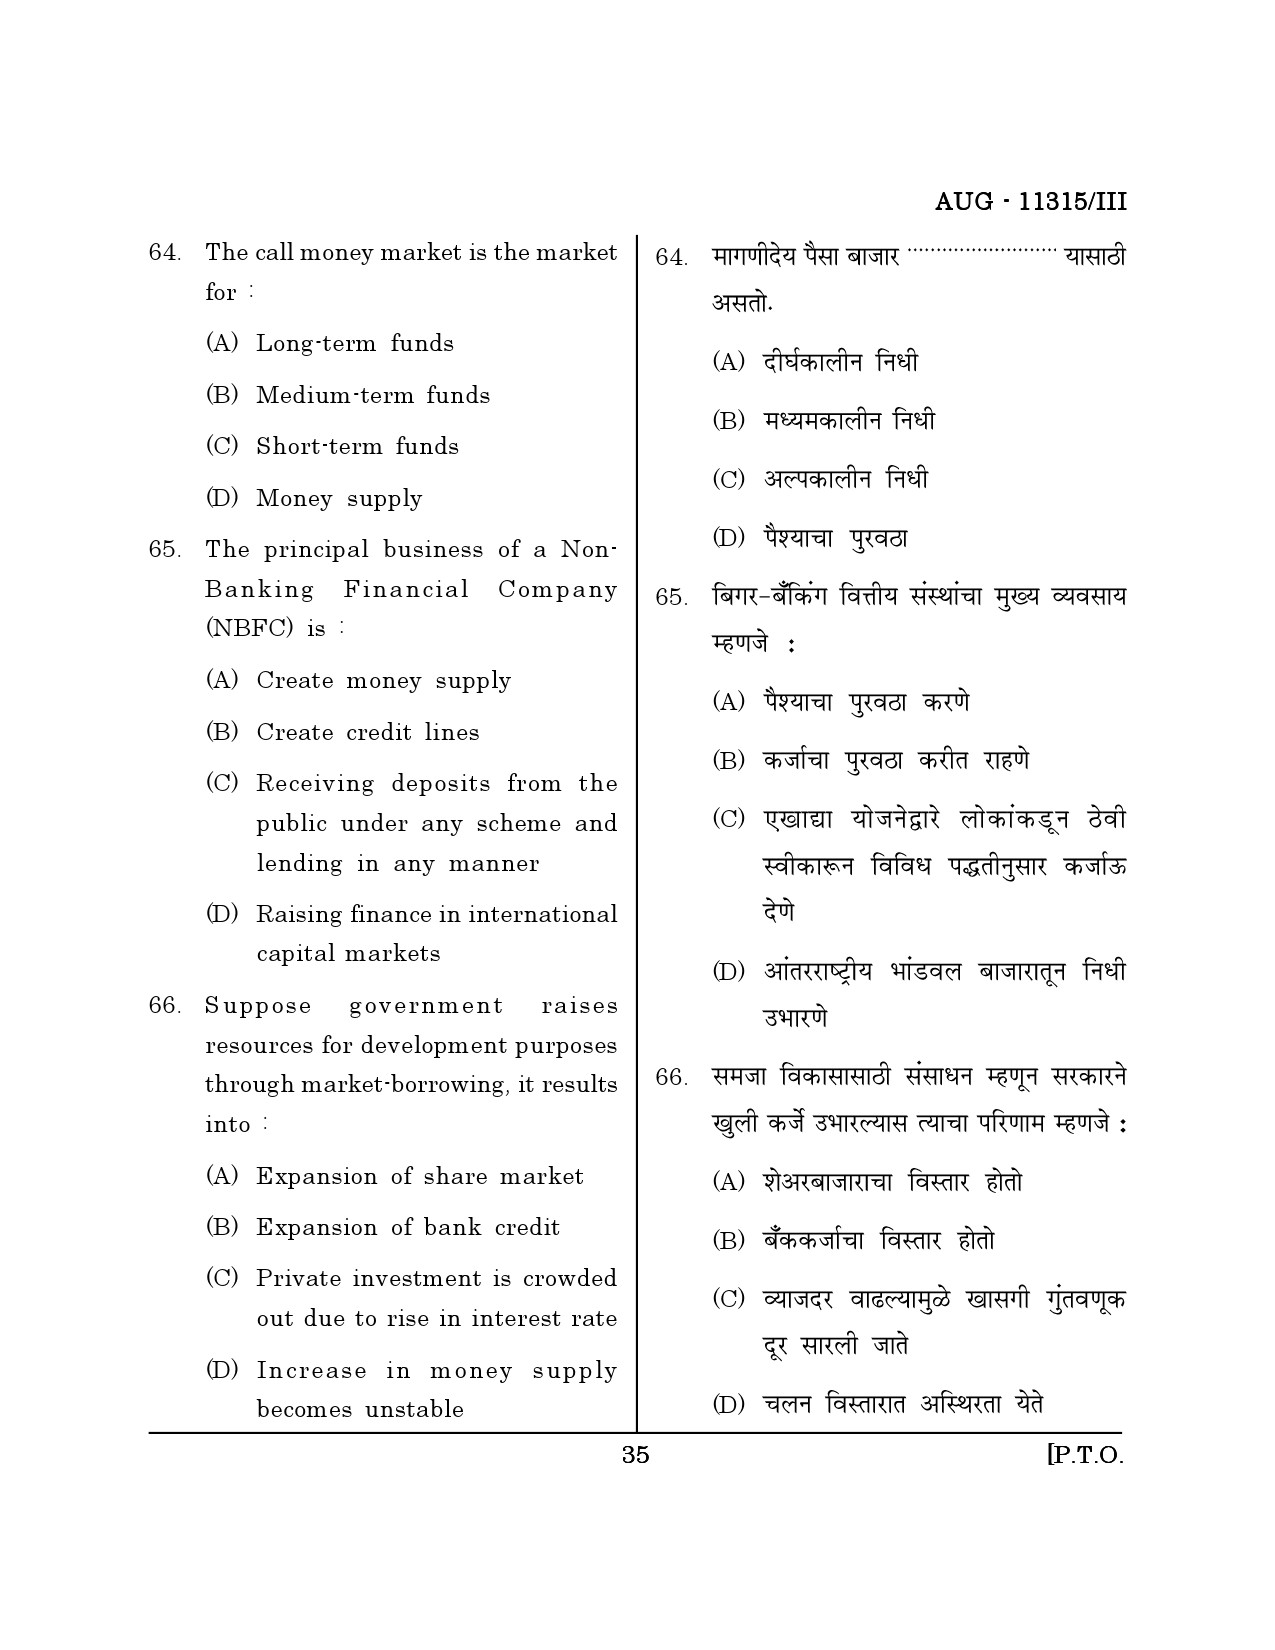 Maharashtra SET Economics Question Paper III August 2015 34